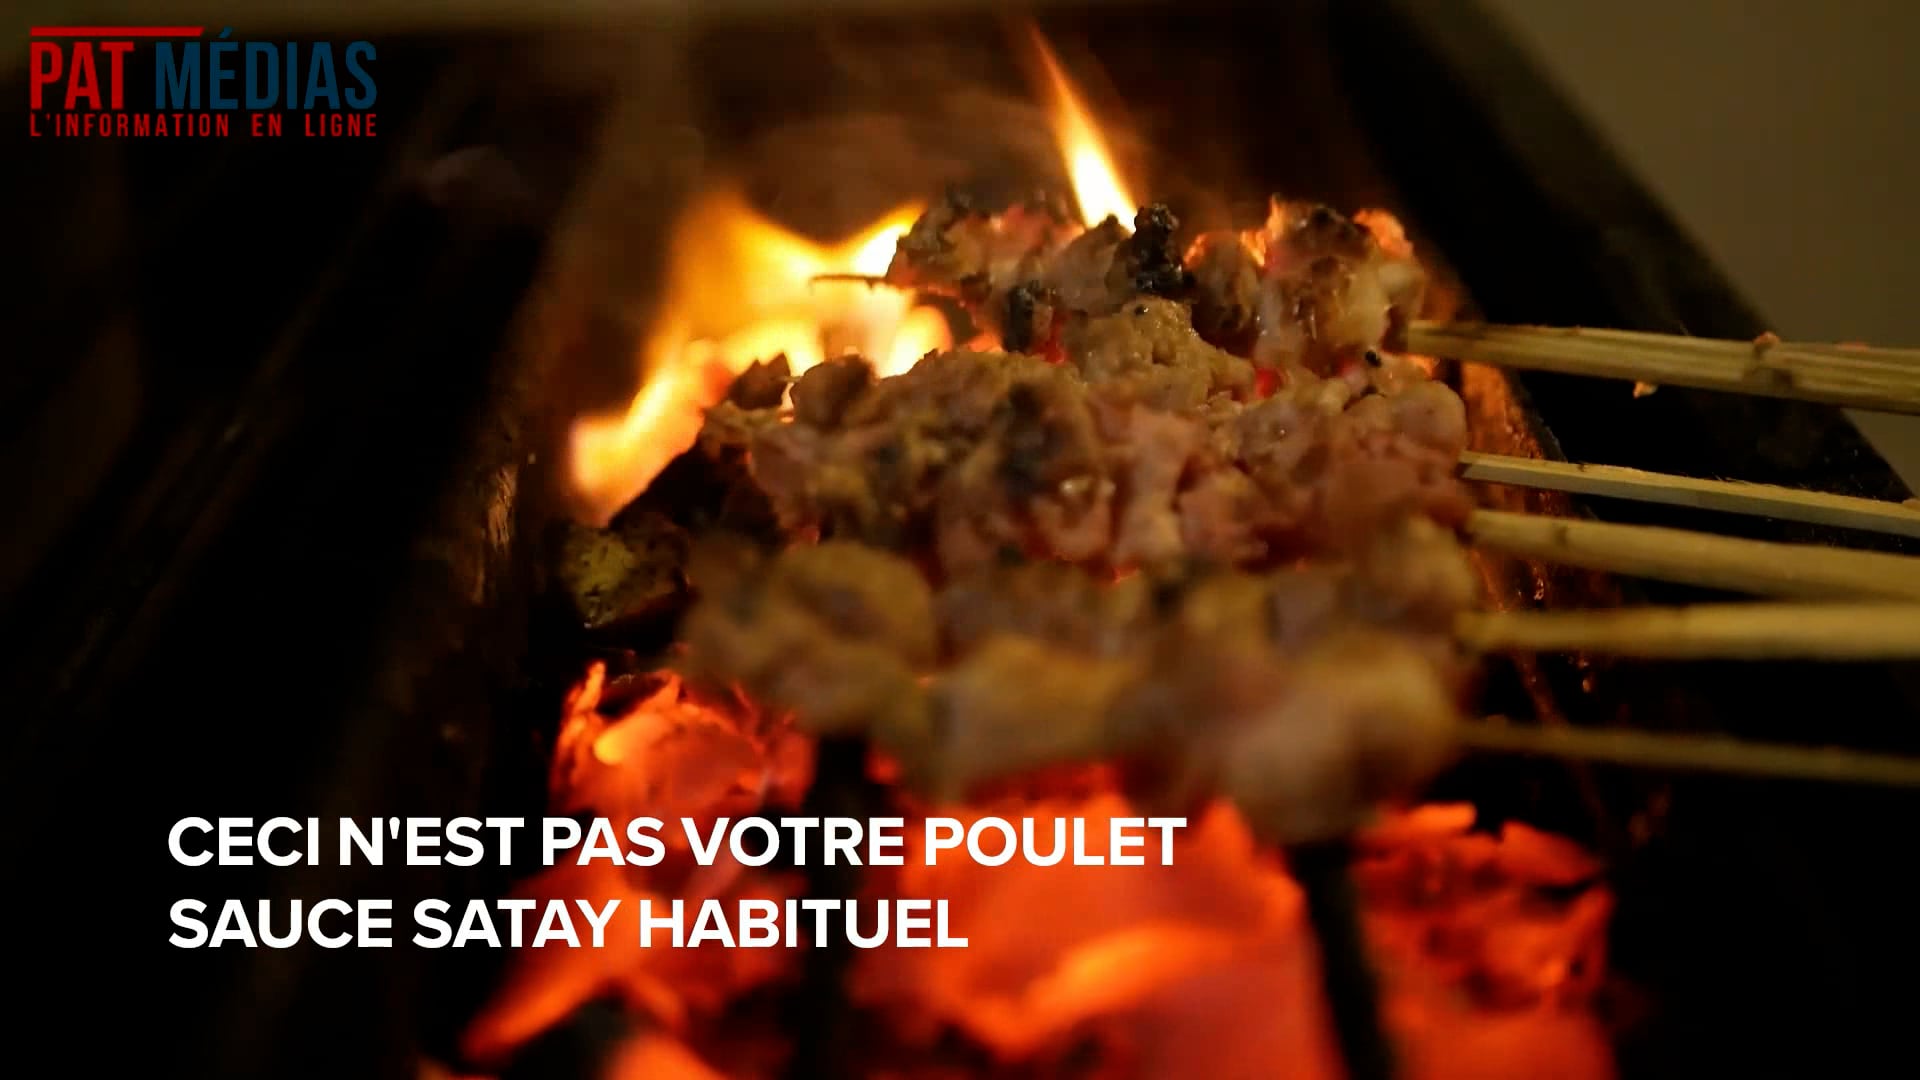 Lézard au barbecue.mp4 on Vimeo